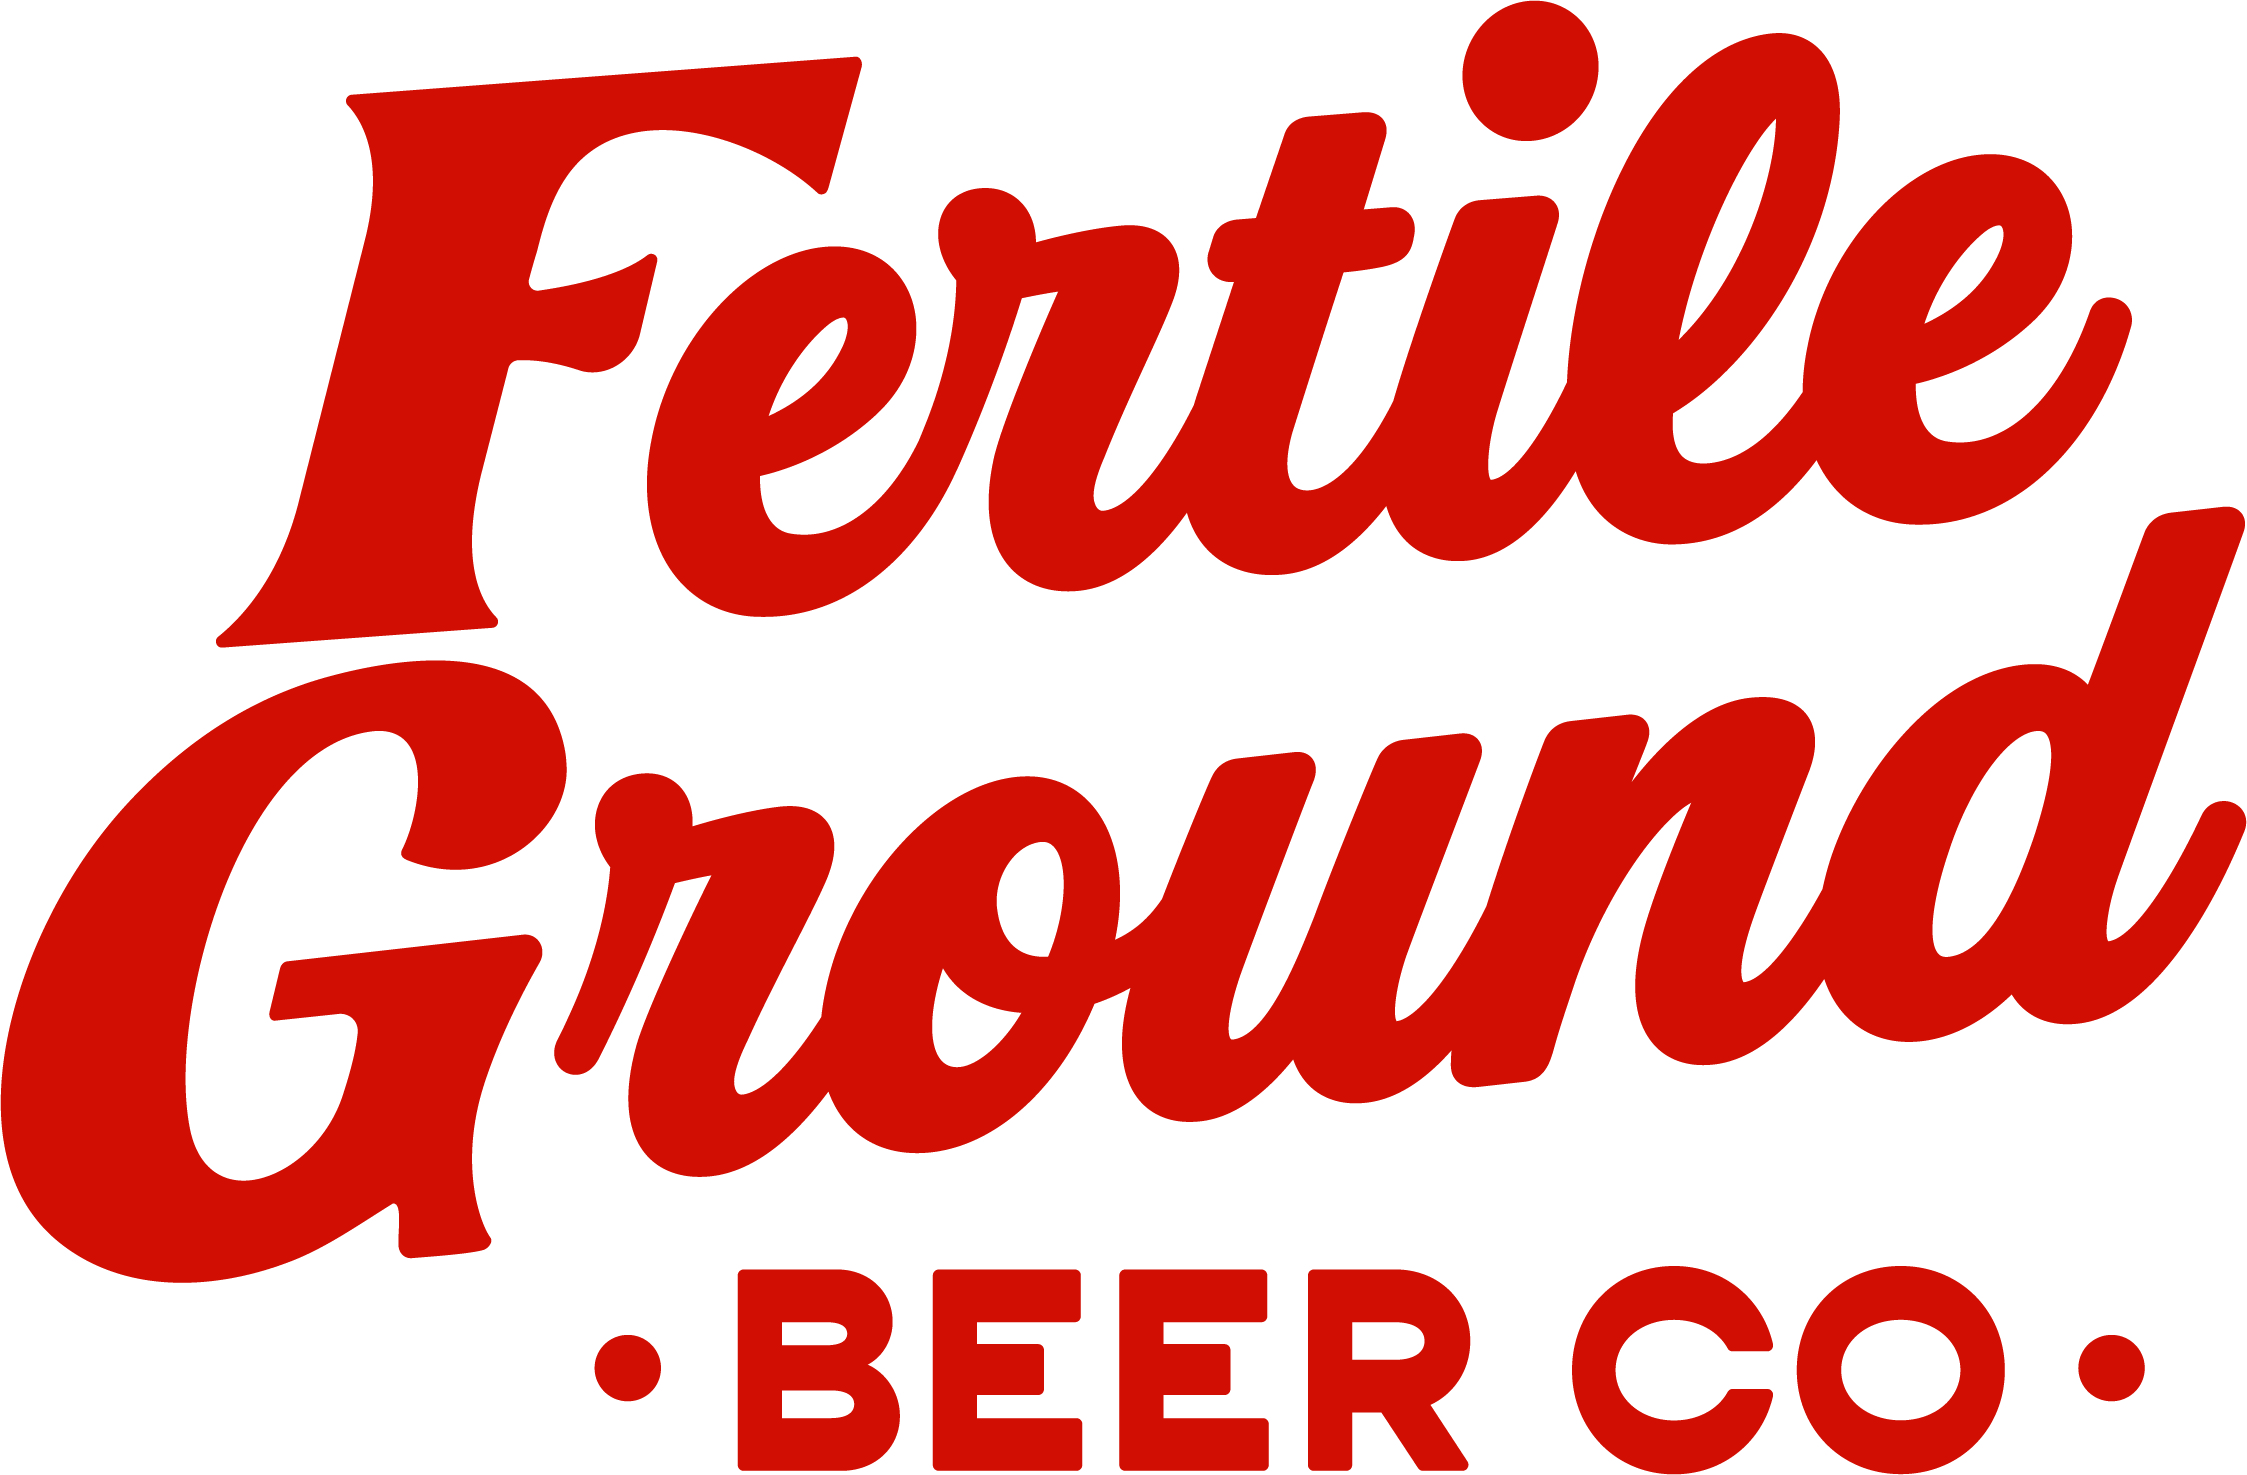 Fertile Ground Beer Co. 